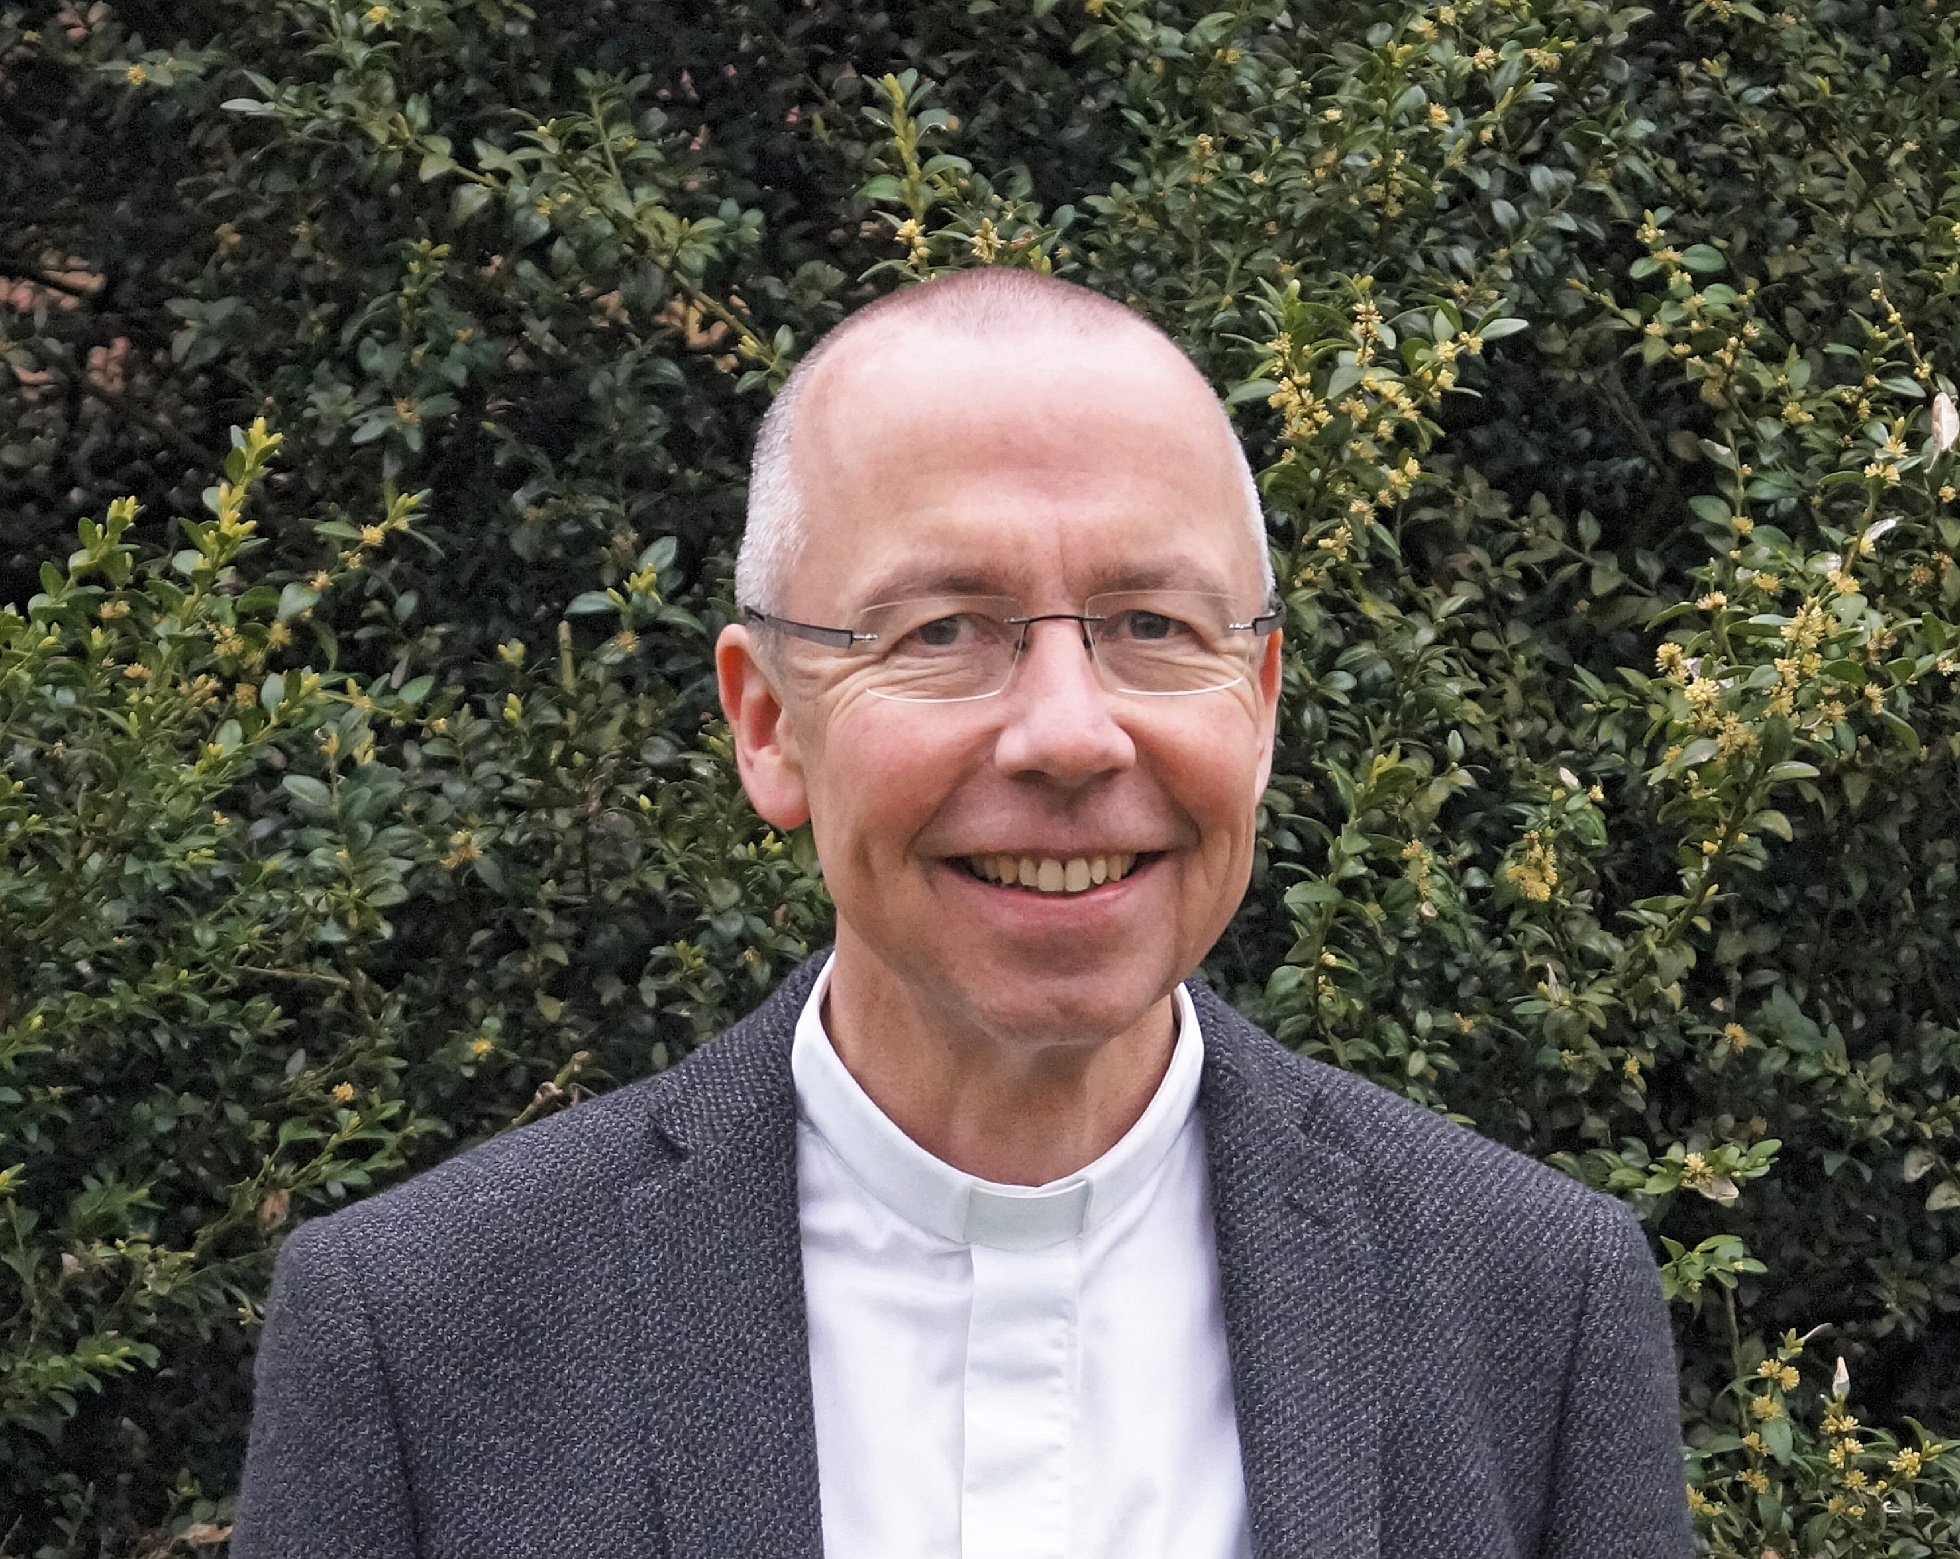 Pfarrer Peter Kossen